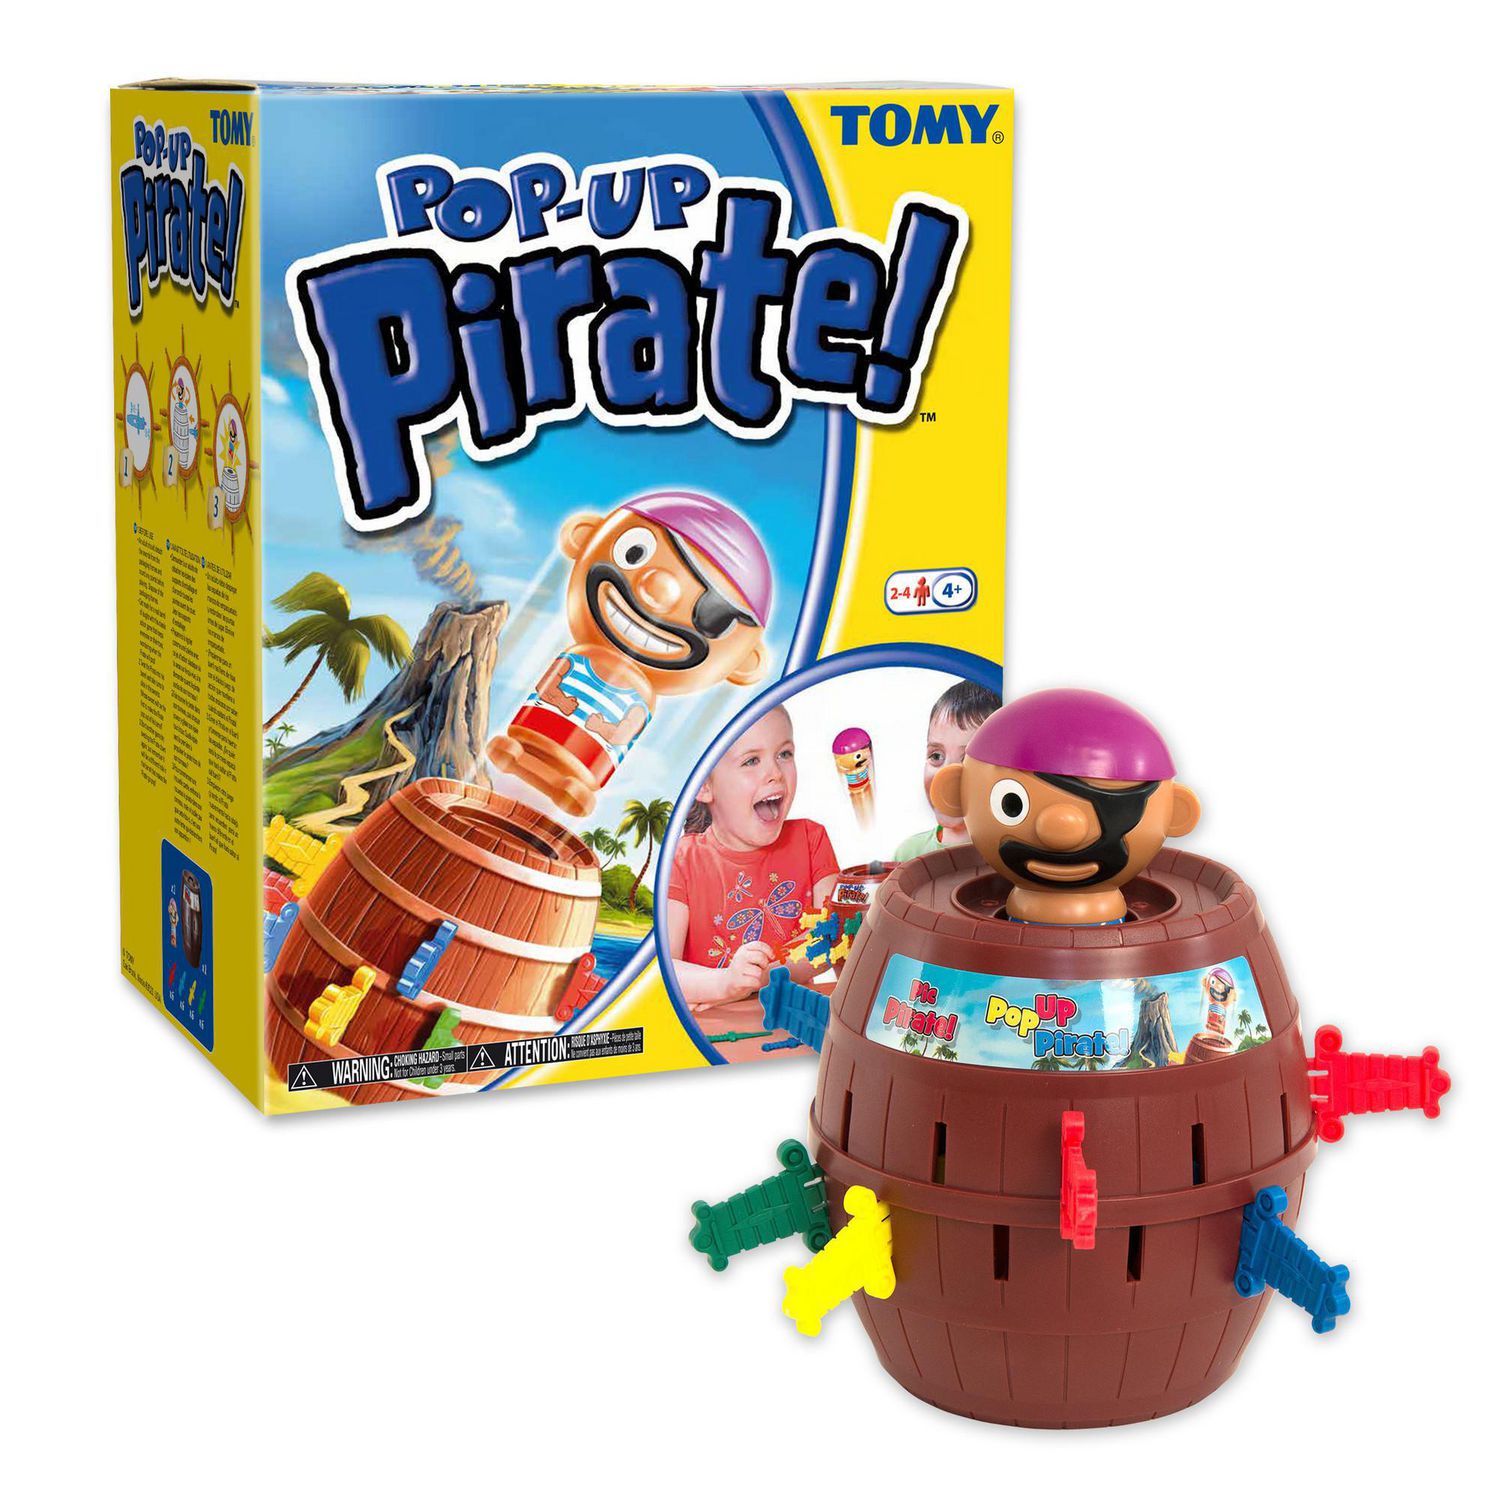 Tomy Pop Up Pirate Classic Children's Action Jeu de Plateau famille-Neuf 